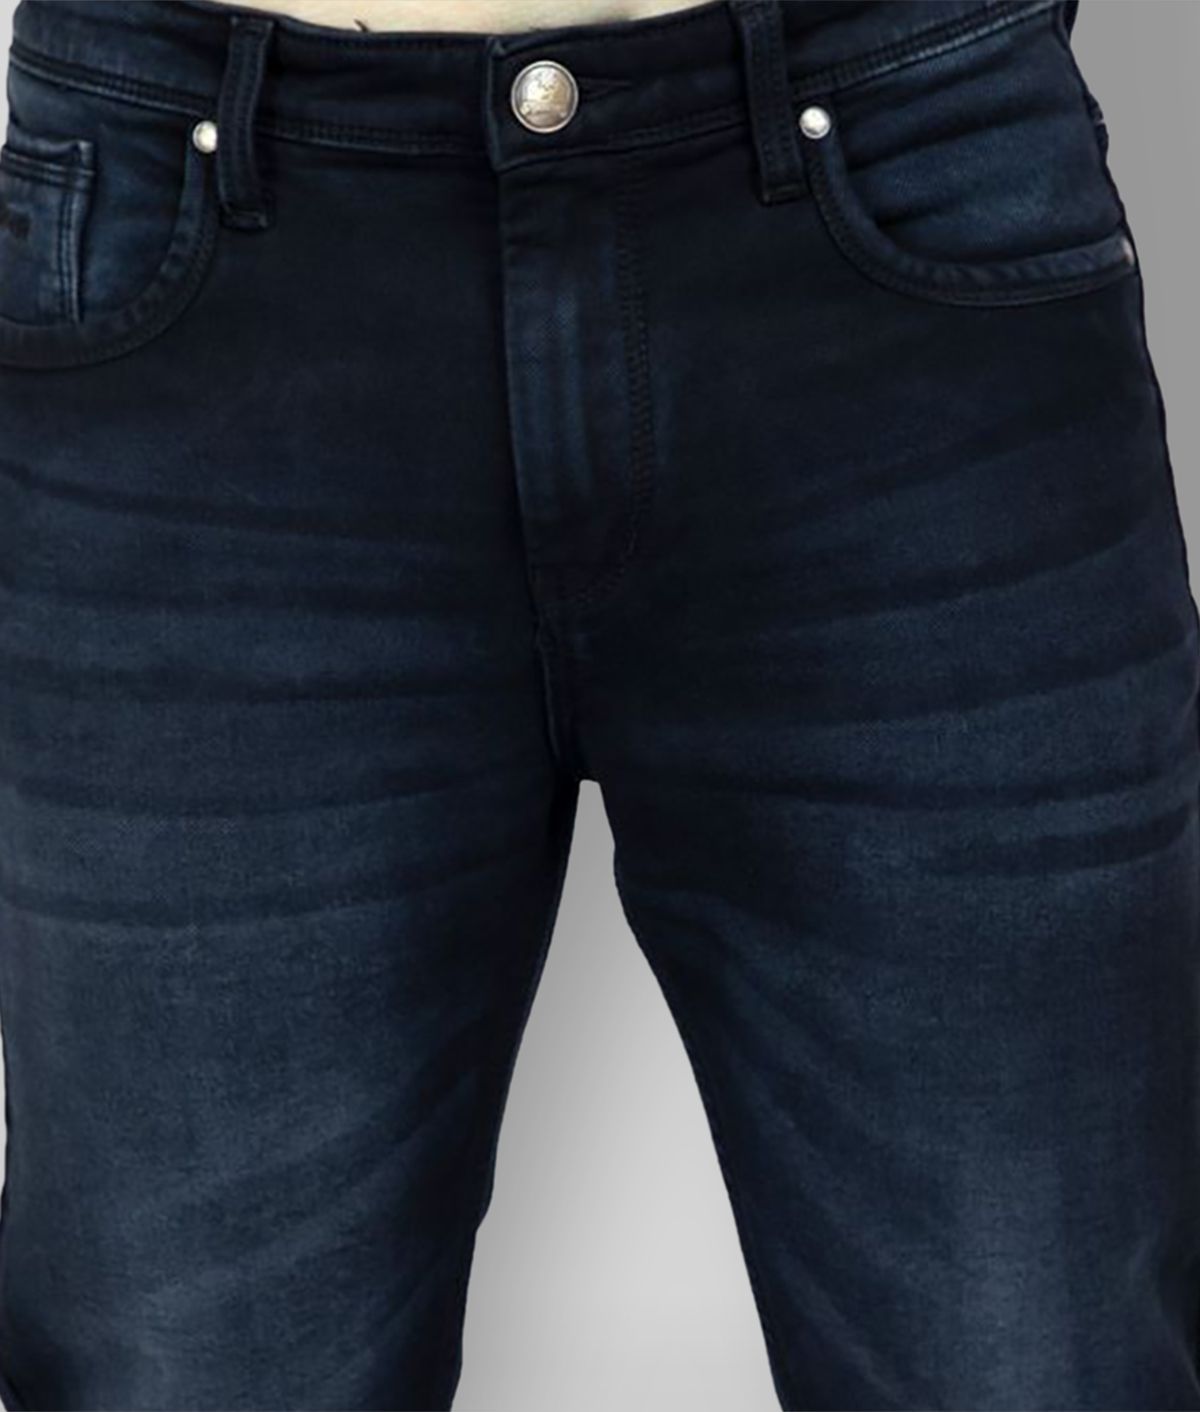 Hasasi Denim - Black 100% Cotton Regular Fit Men's Jeans ( Pack of 1 )